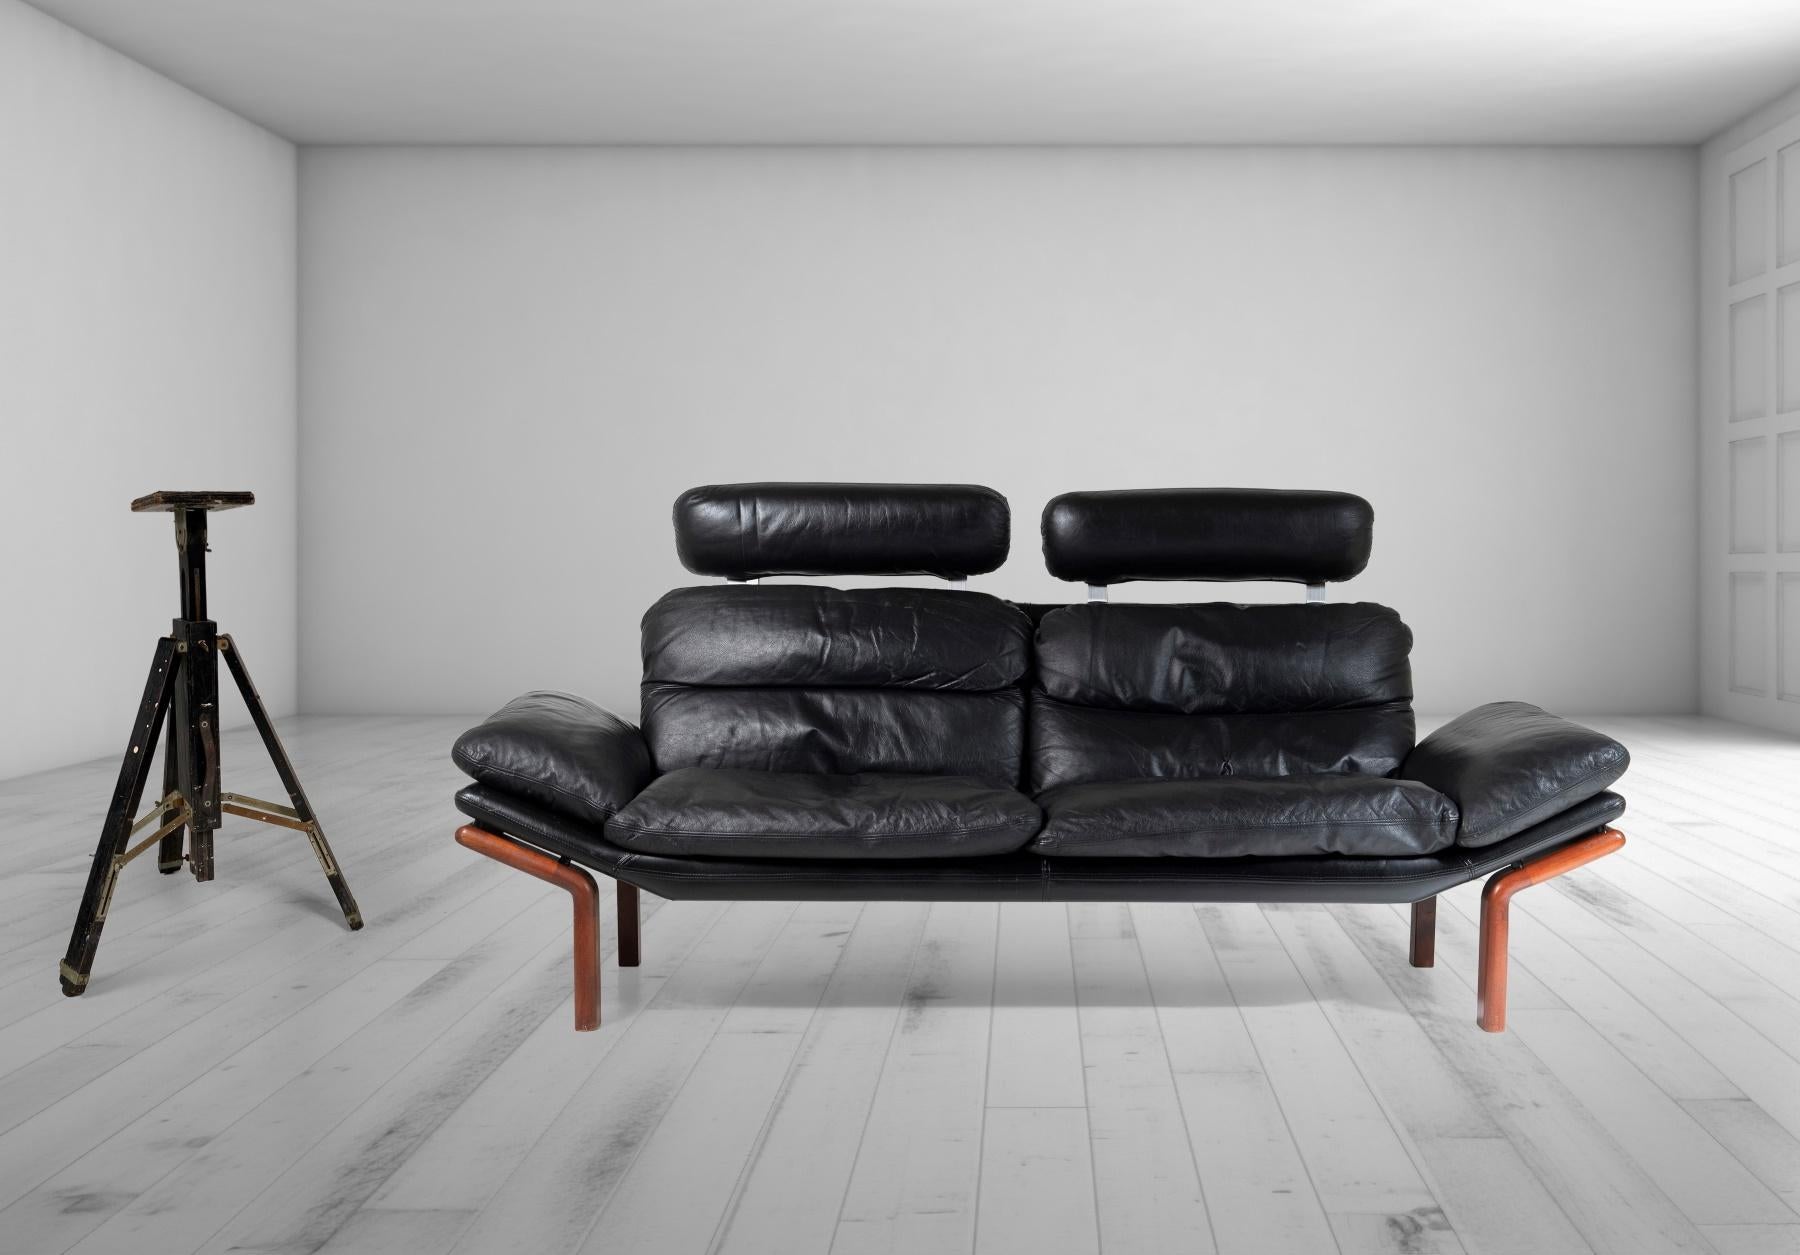 1960-70s Mid-Century Modern Danish Black Leather and Teak Sofa by Komfort For Sale 11